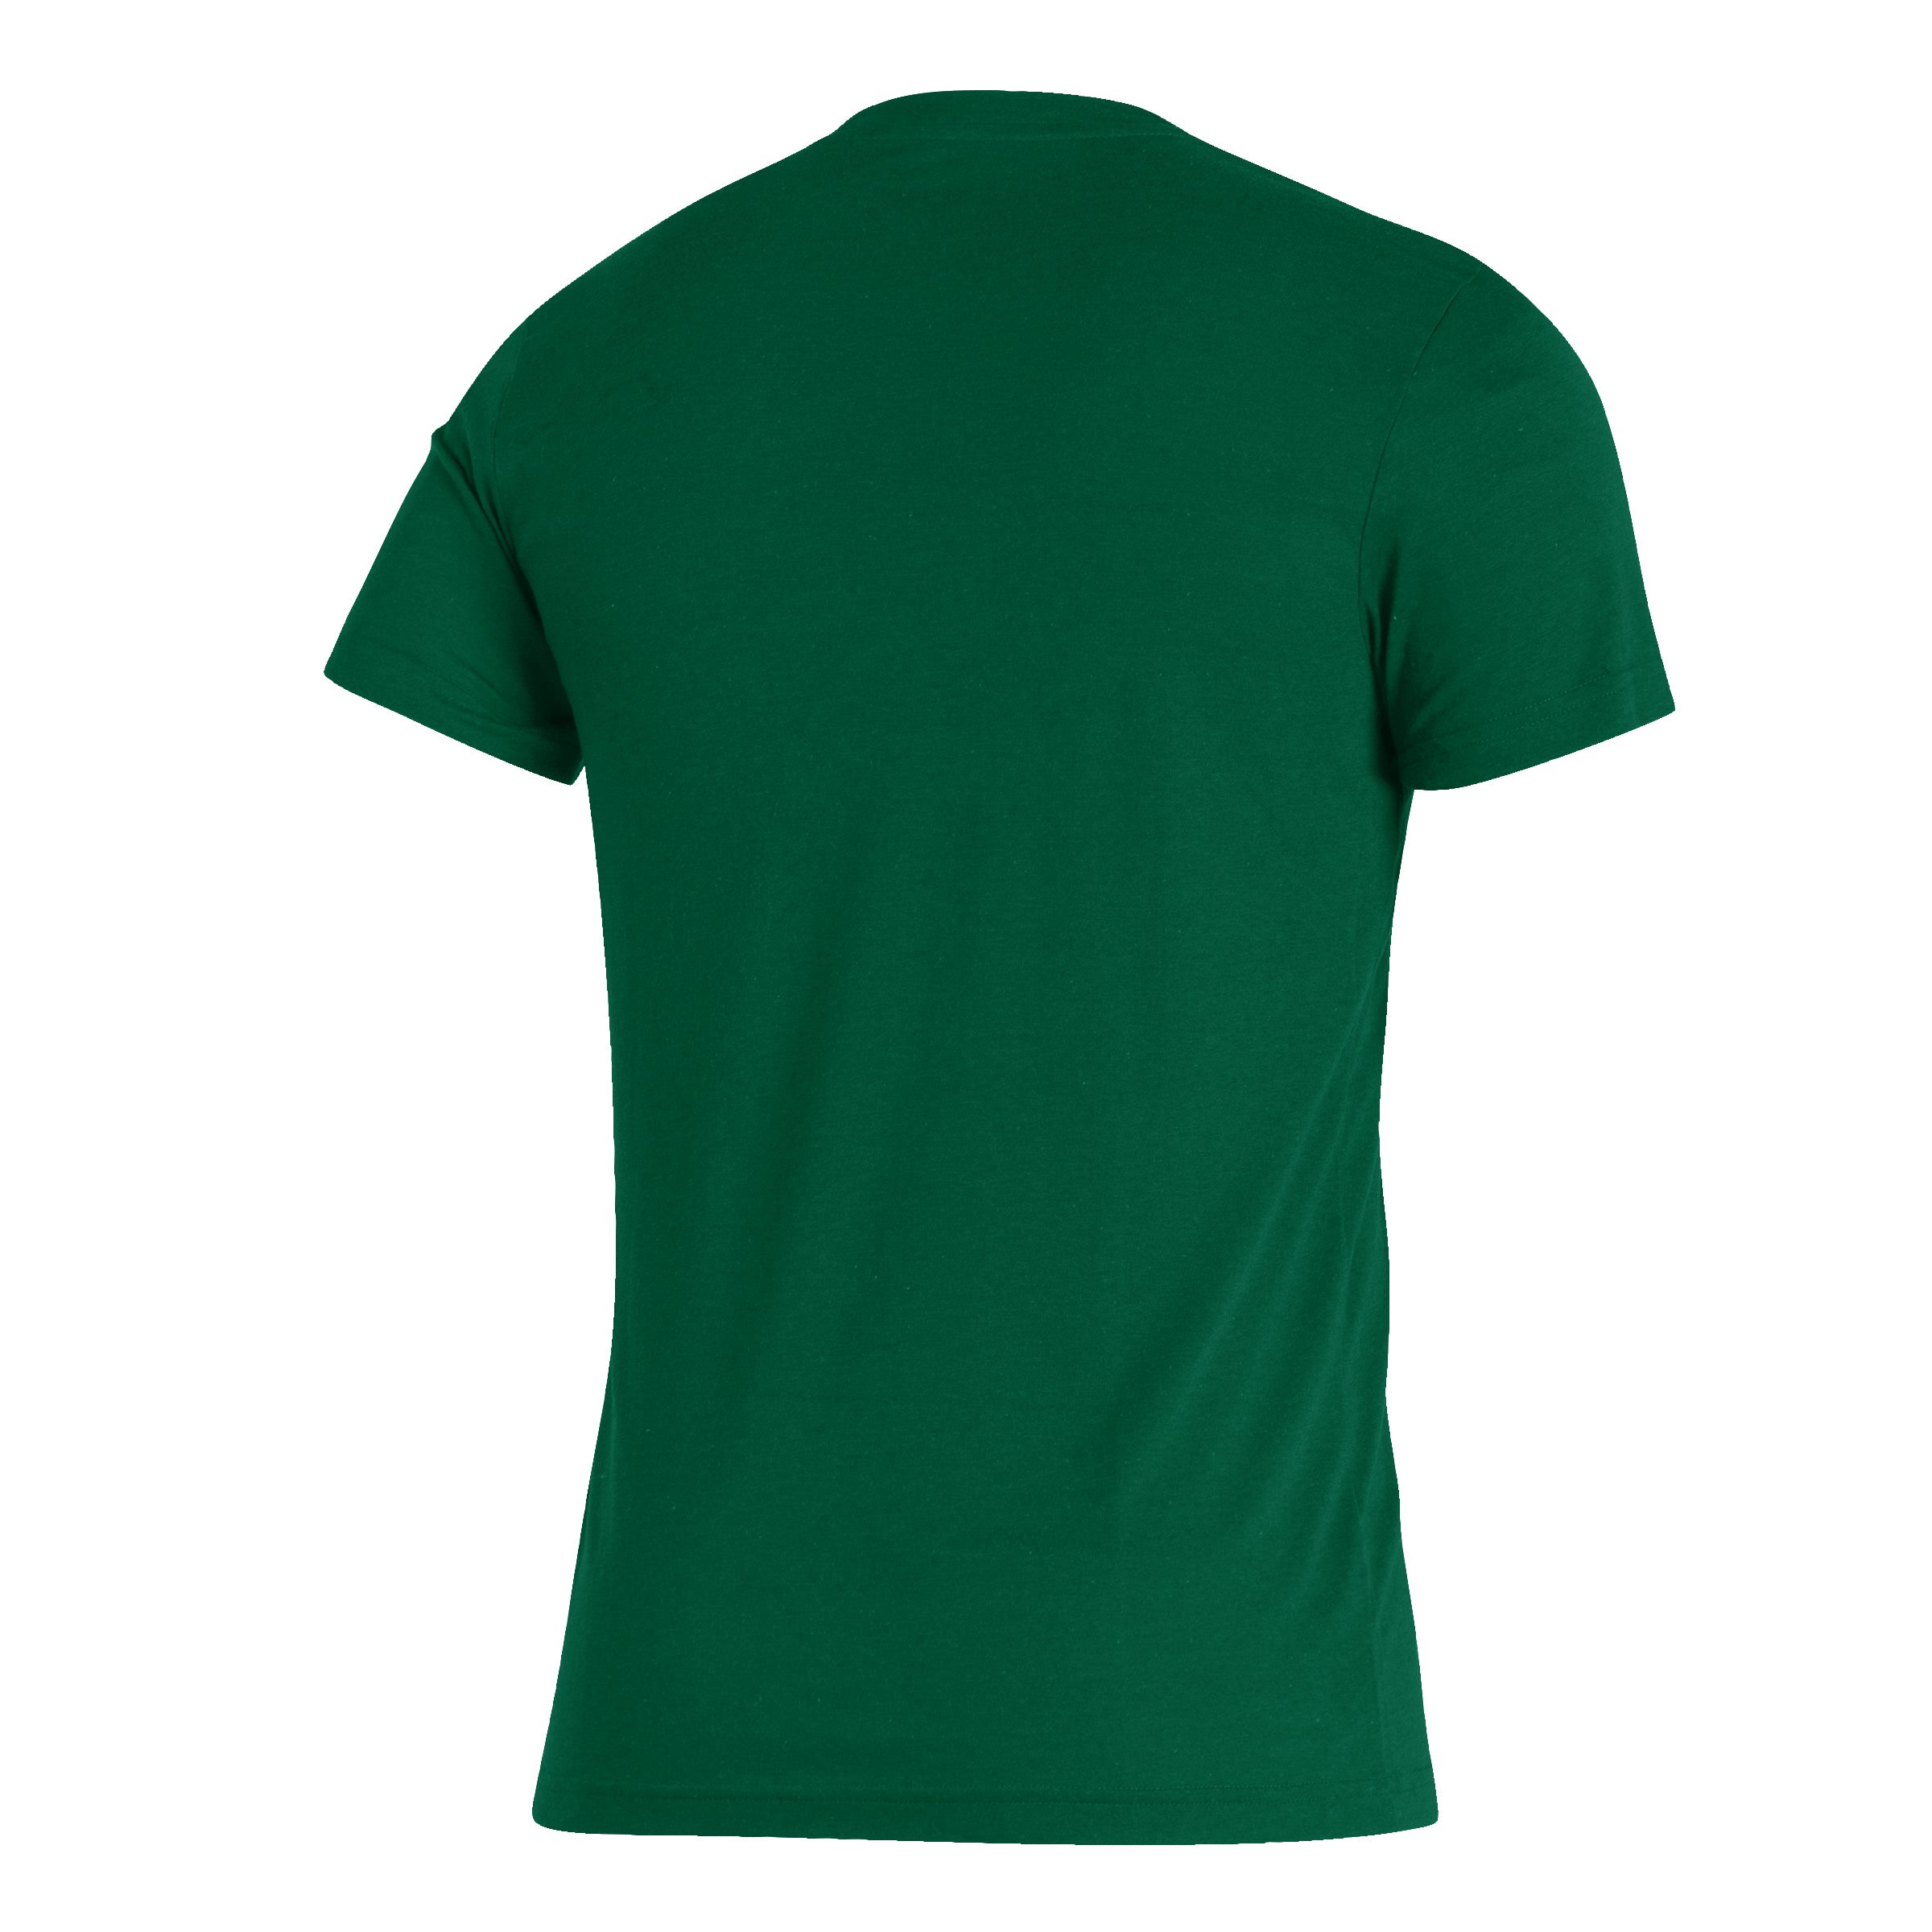 Miami Hurricanes adidas All About The U Shield Tri-Blend T-Shirt - Green